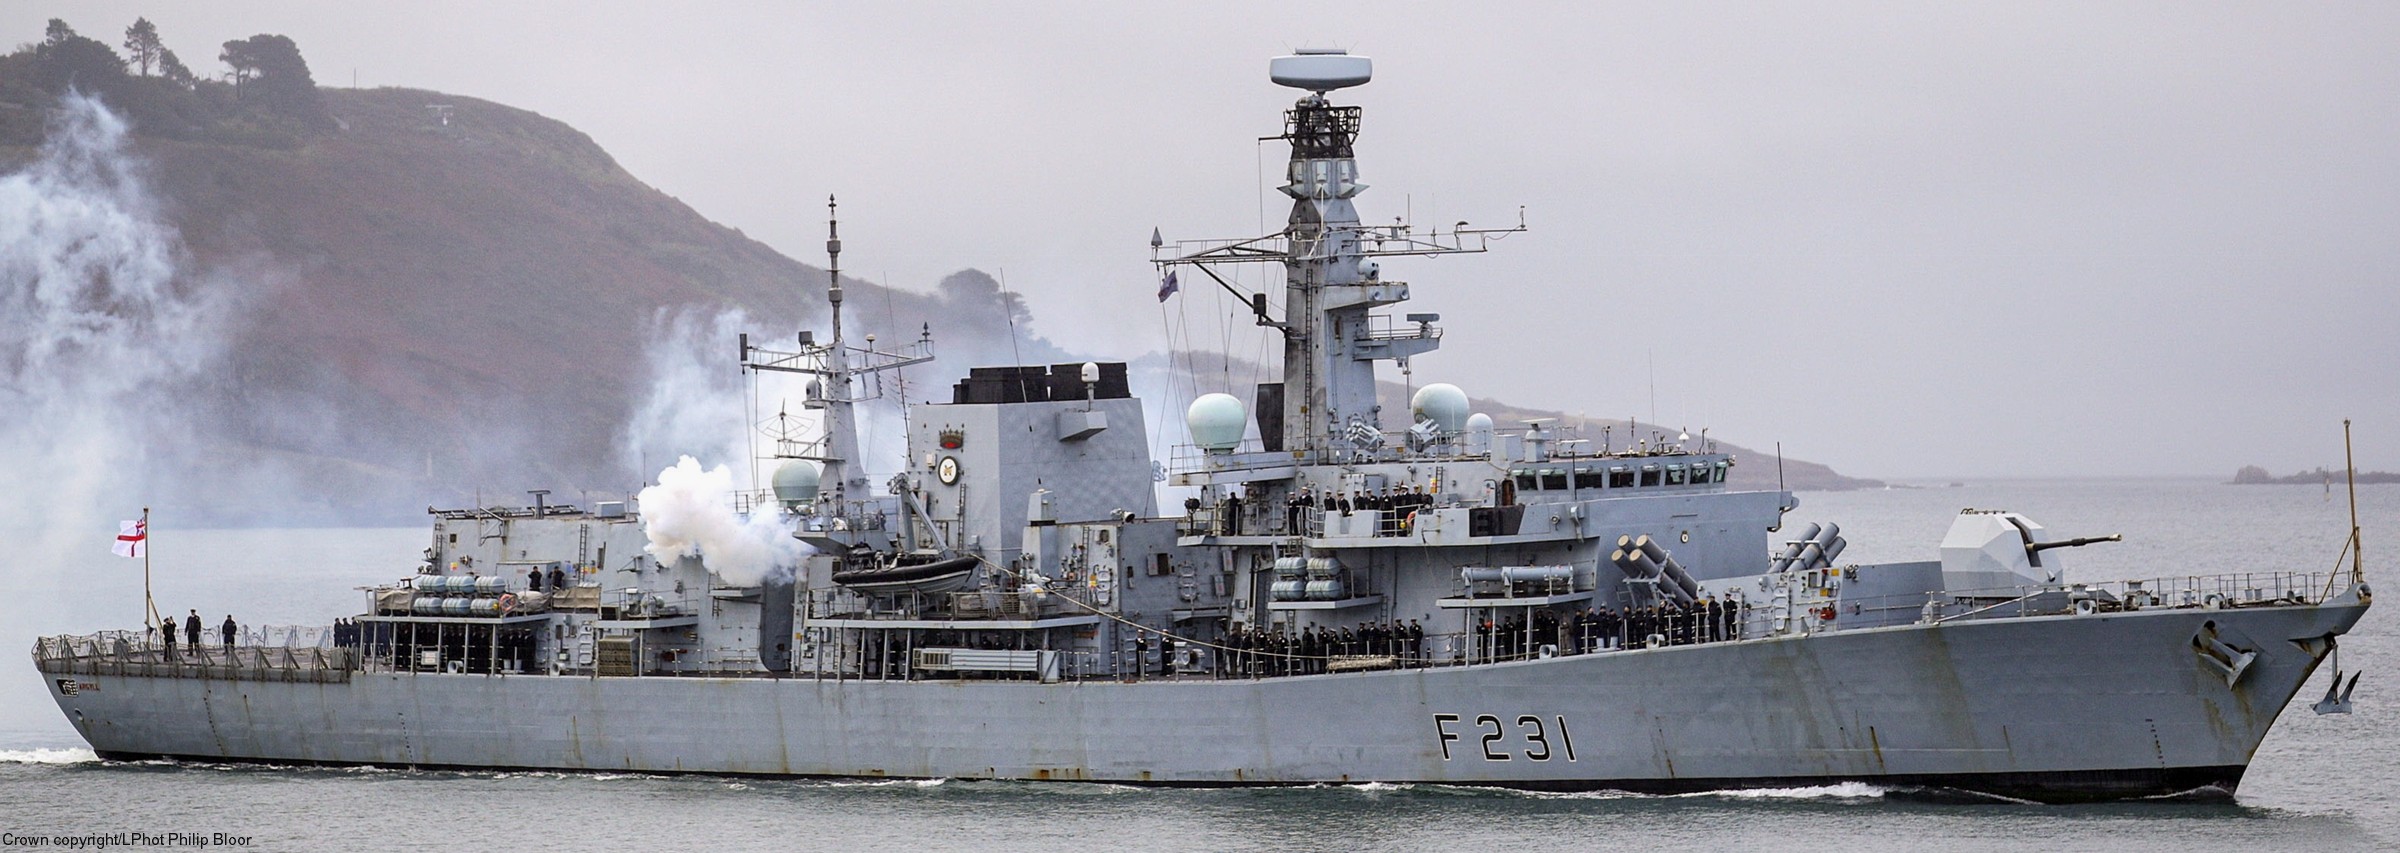 f-231 hms argyll type 23 duke class guided missile frigate ffg royal navy 52